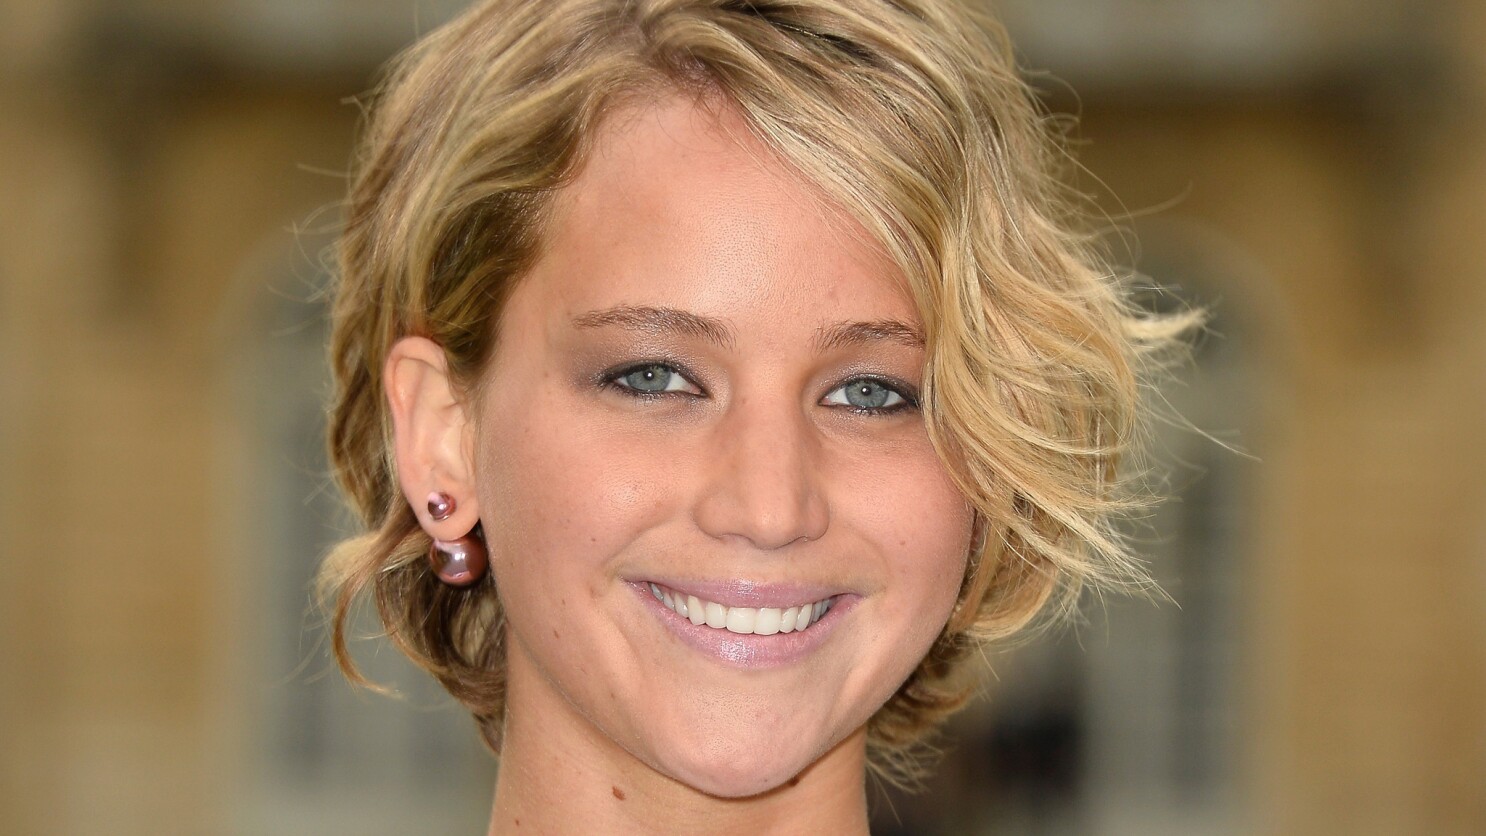 Lawrence photos leaked jennifer Jennifer Lawrence